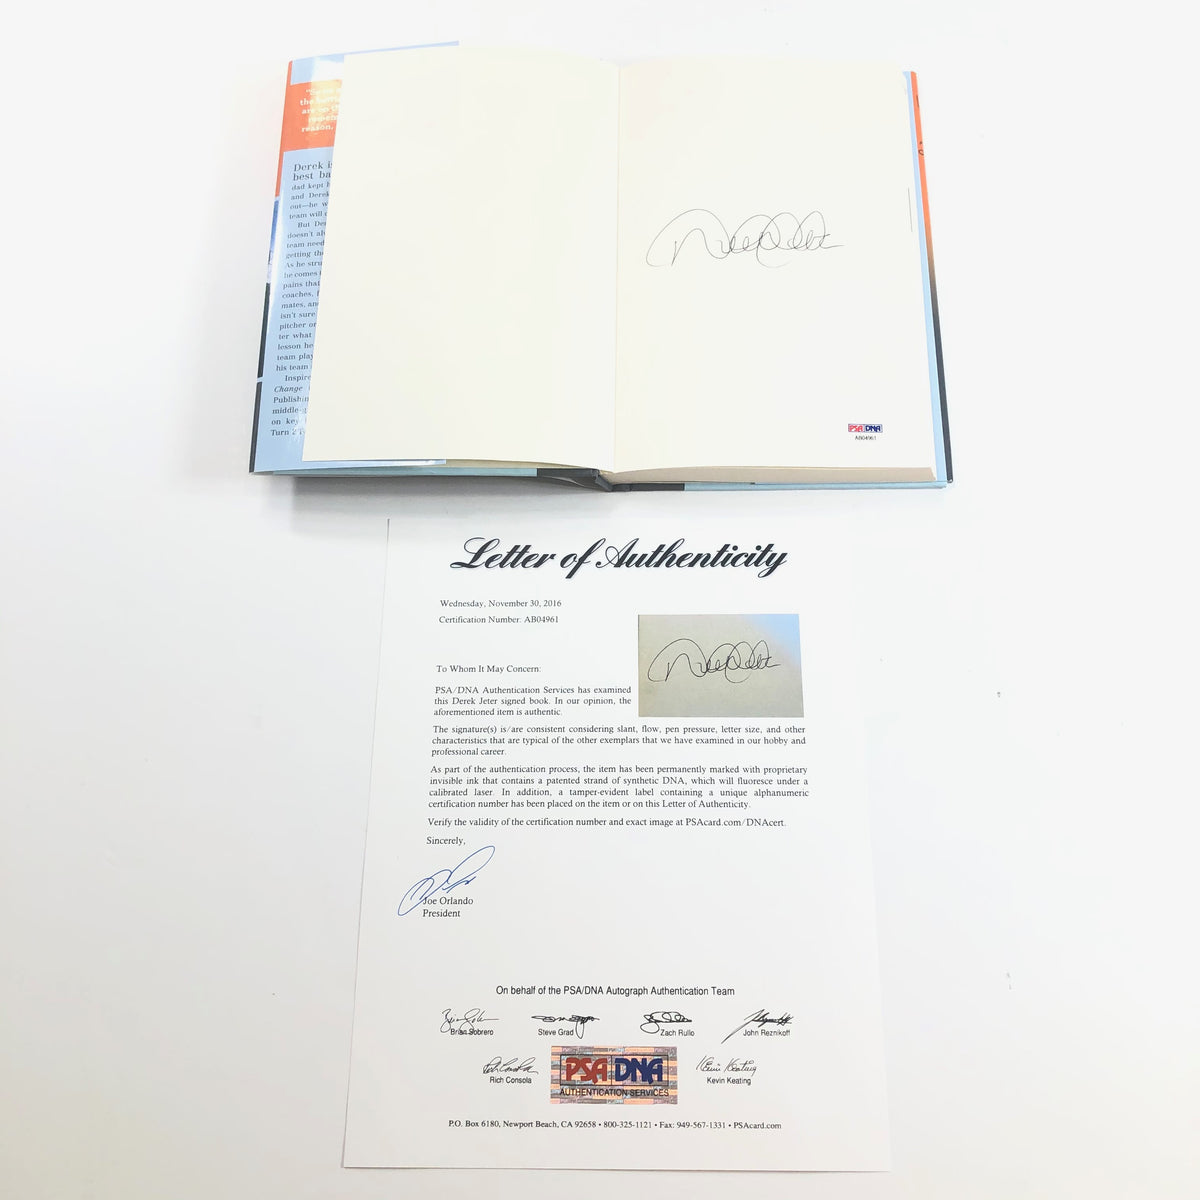 Derek Jeter Autographed Framed Jersey for Sale in Dallas, TX